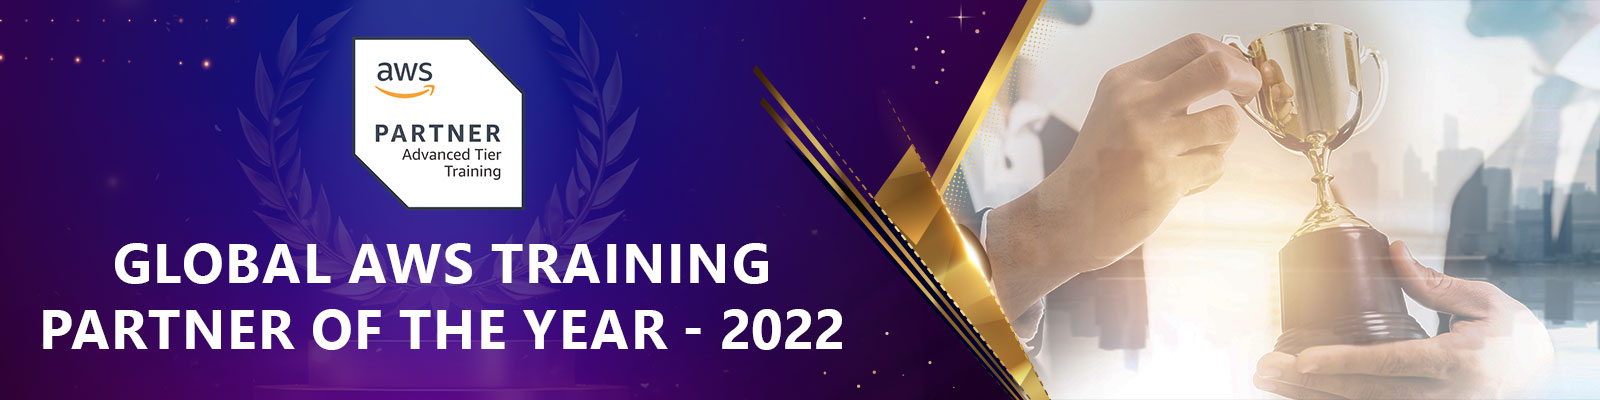 trainocate-global-aws-training-partner-2022